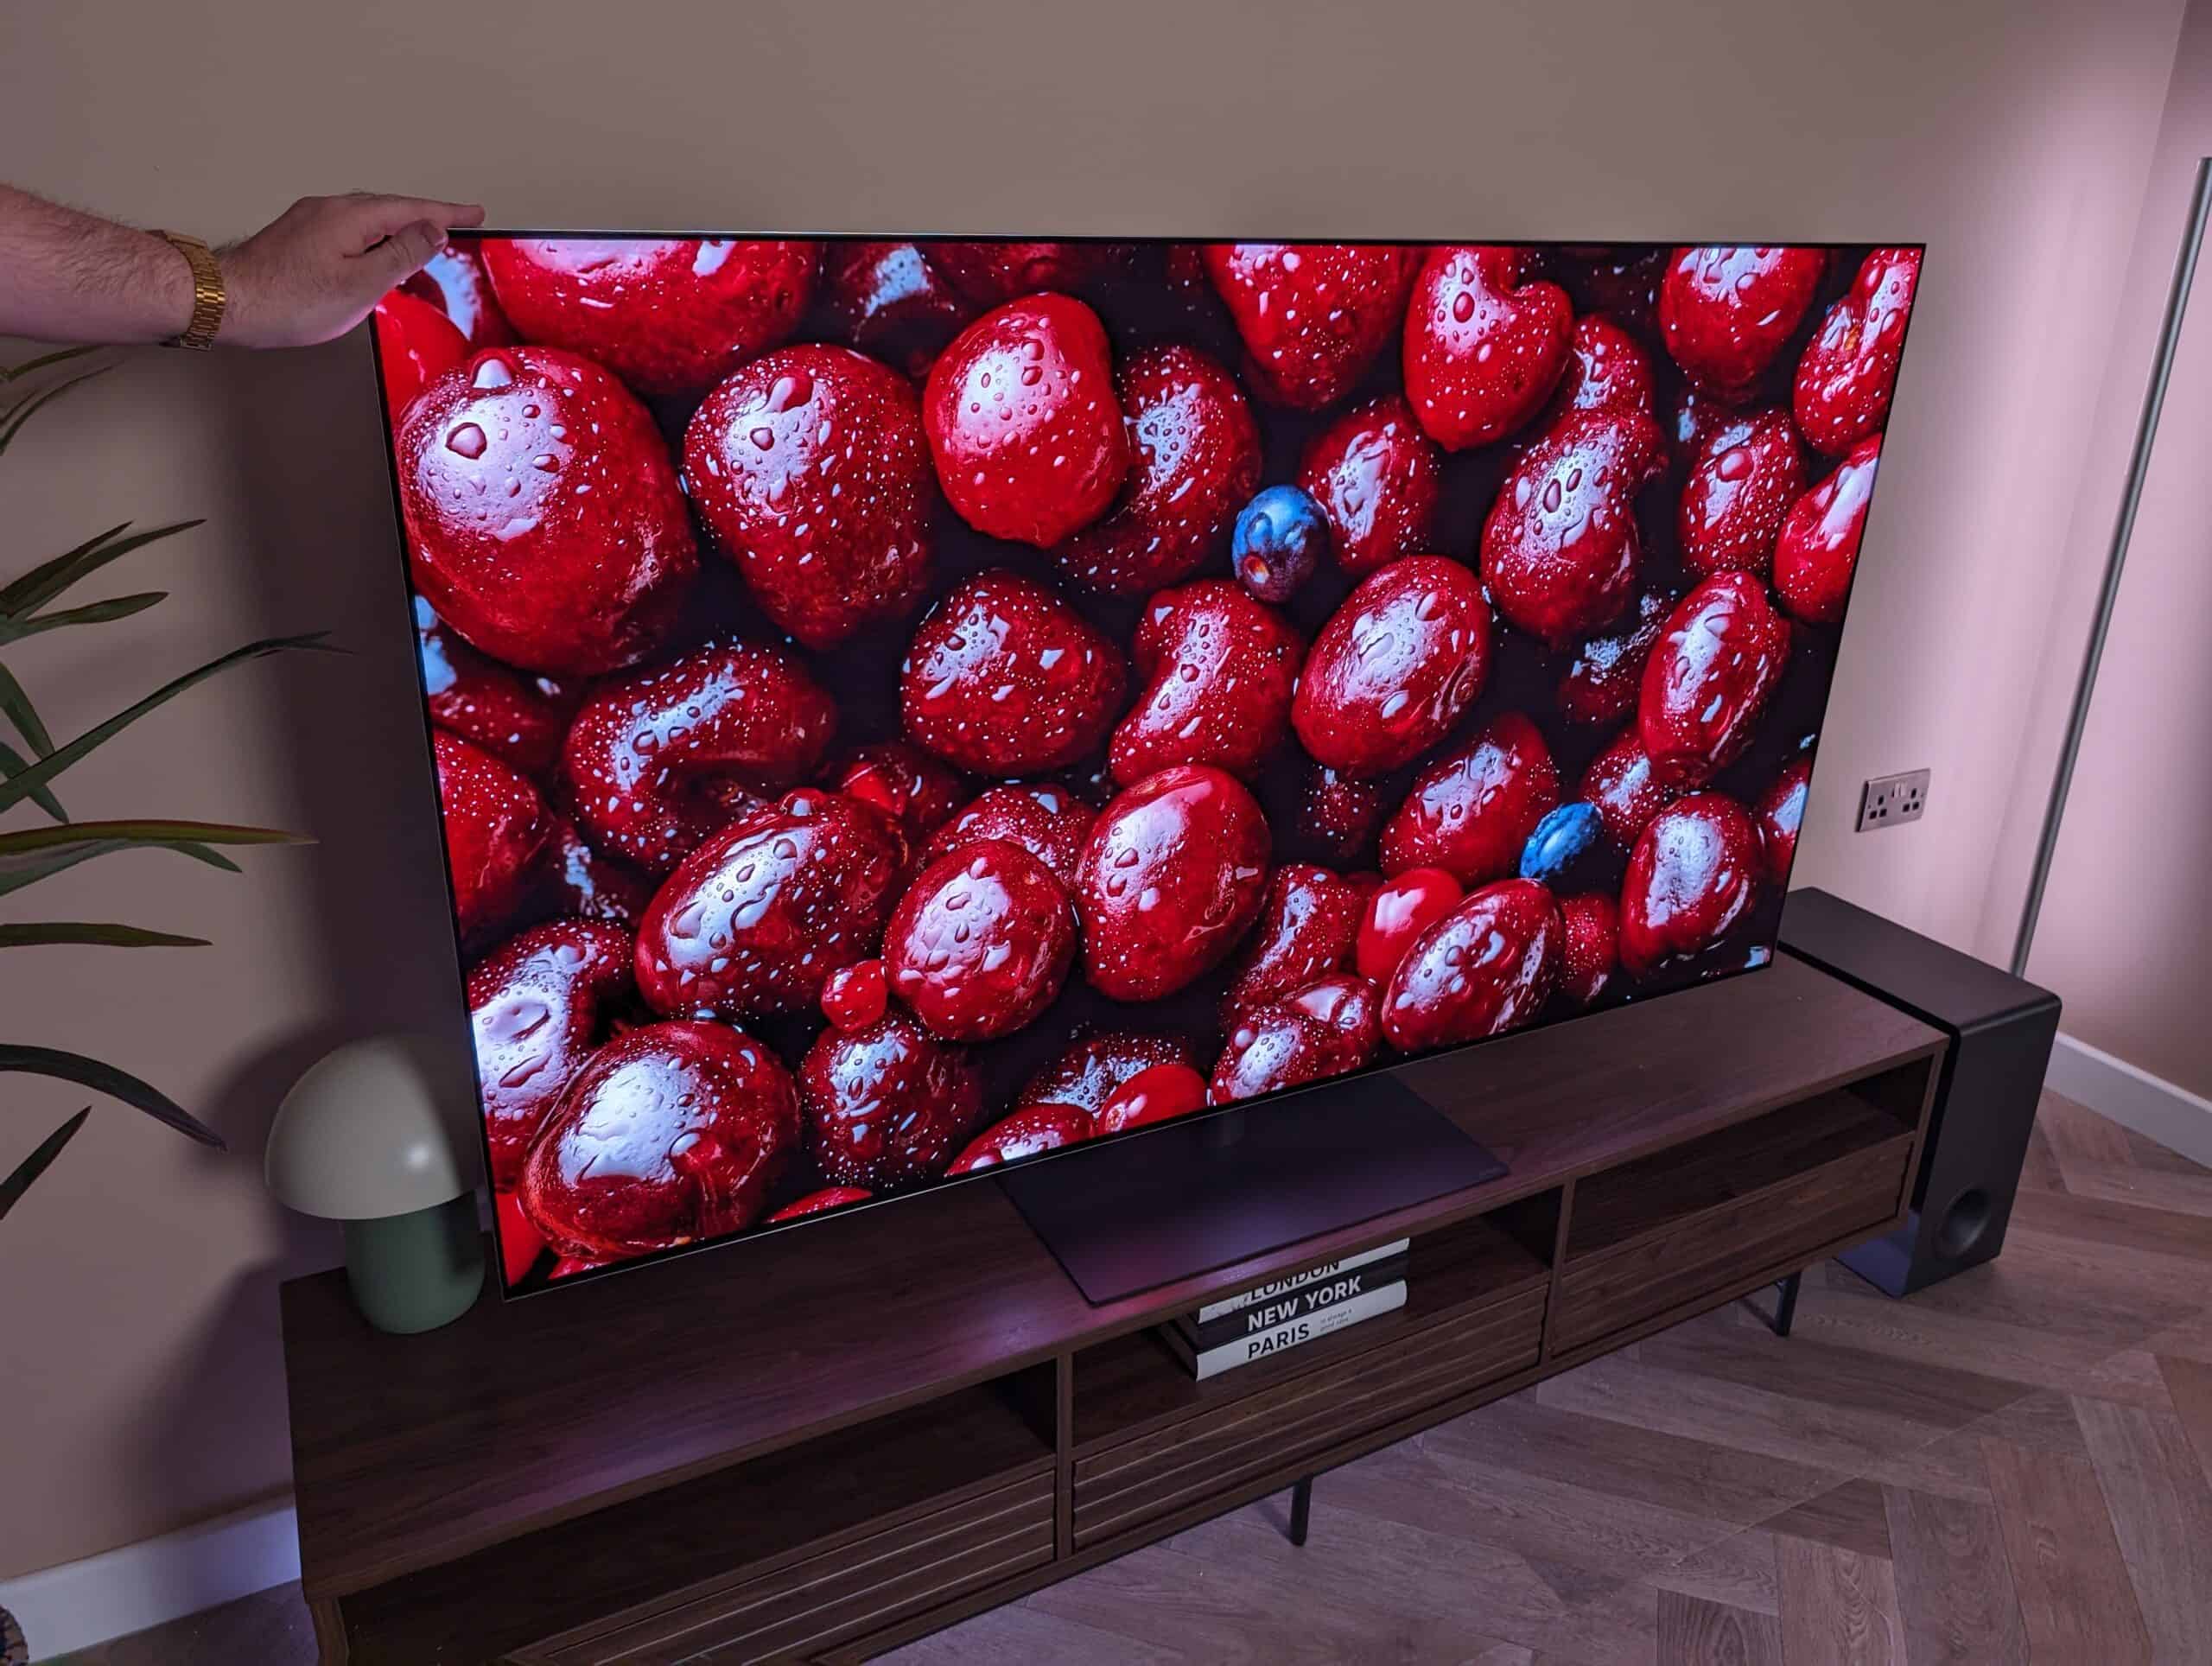 LG G3 OLED TV deal on Amazon gaming week